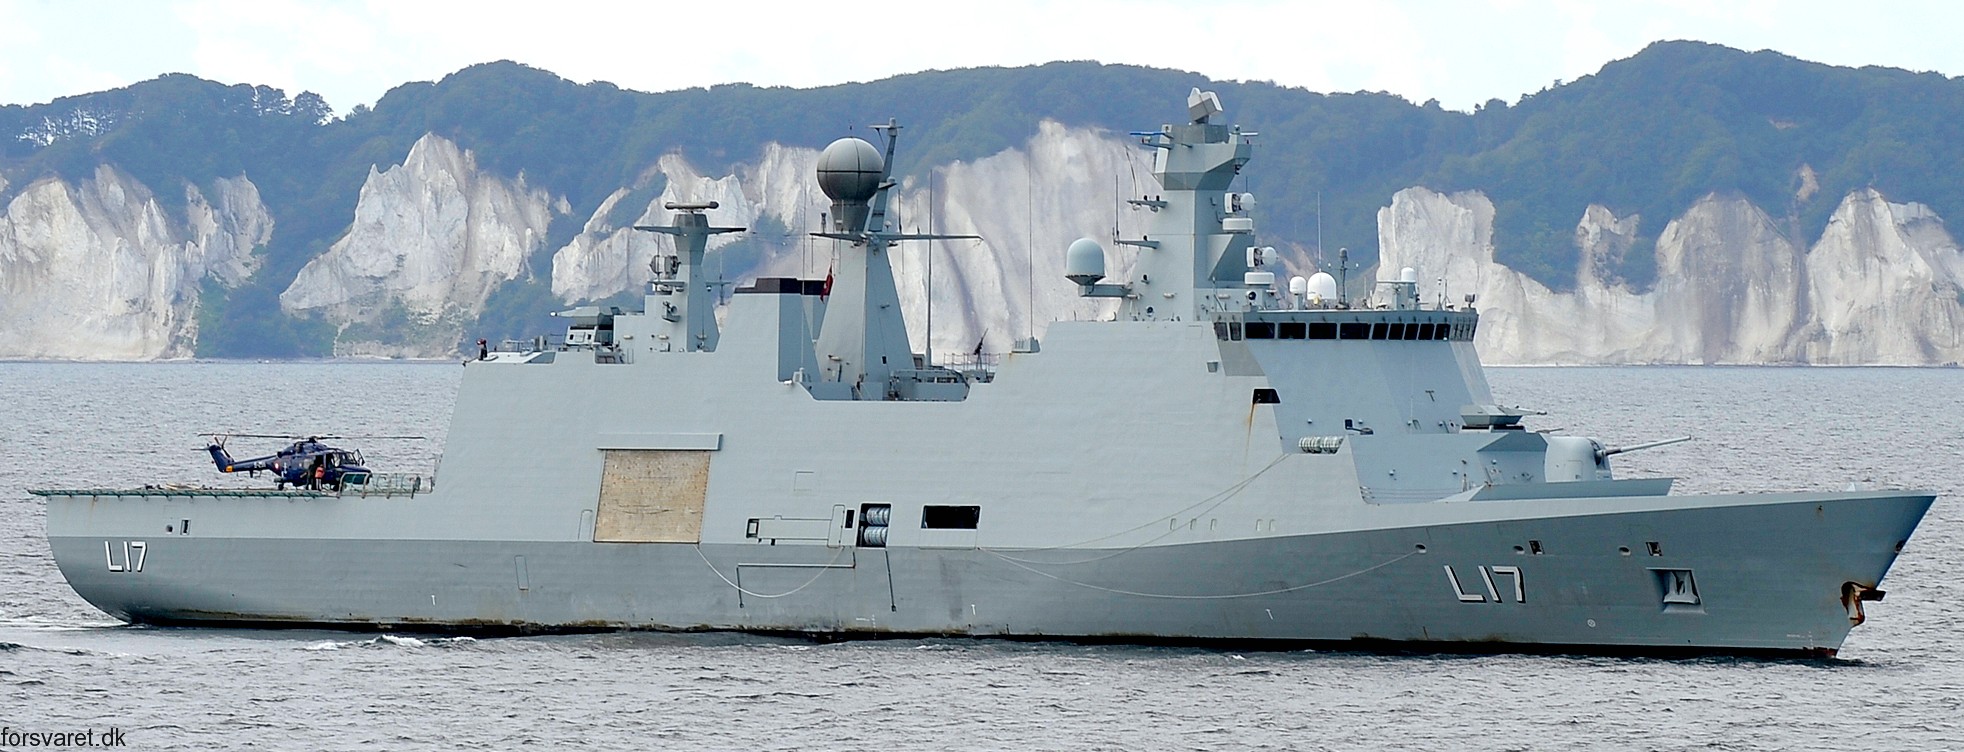 f-342 hdms esbern snare l-17 frigate command support ship royal danish navy 36